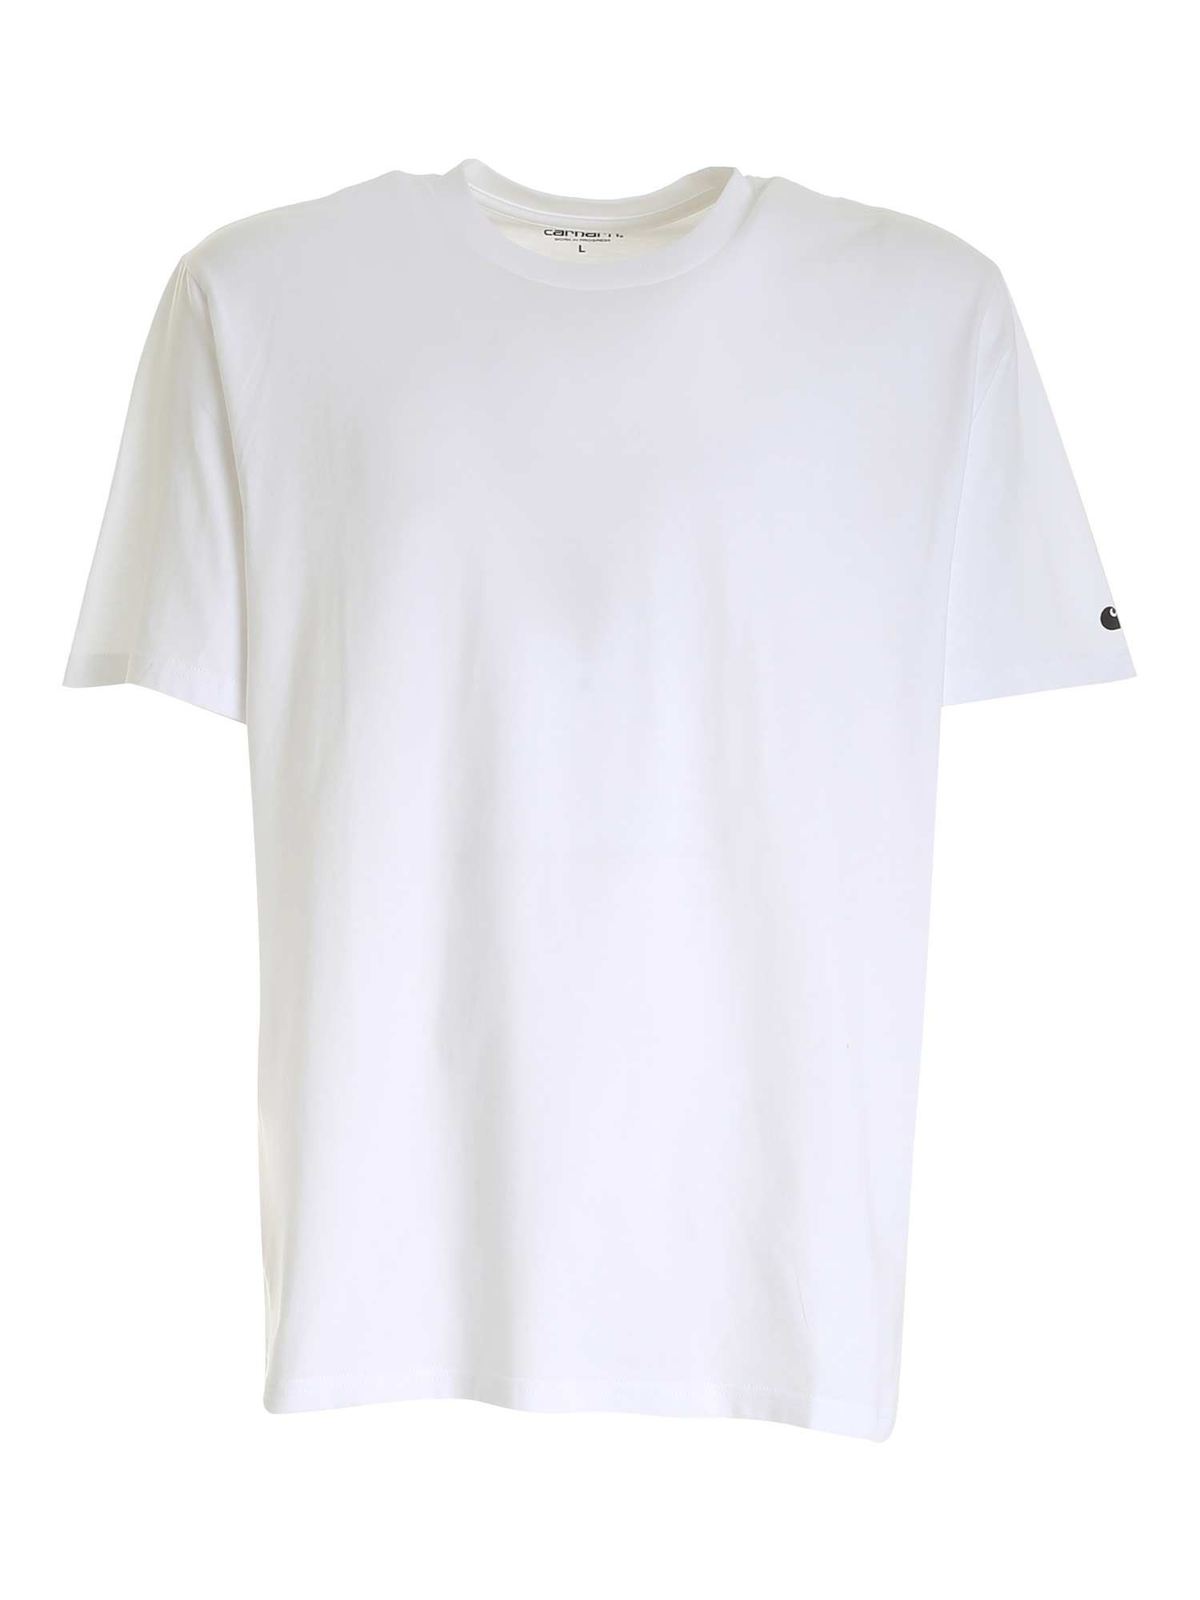 Shop Carhartt Camiseta - Base In White